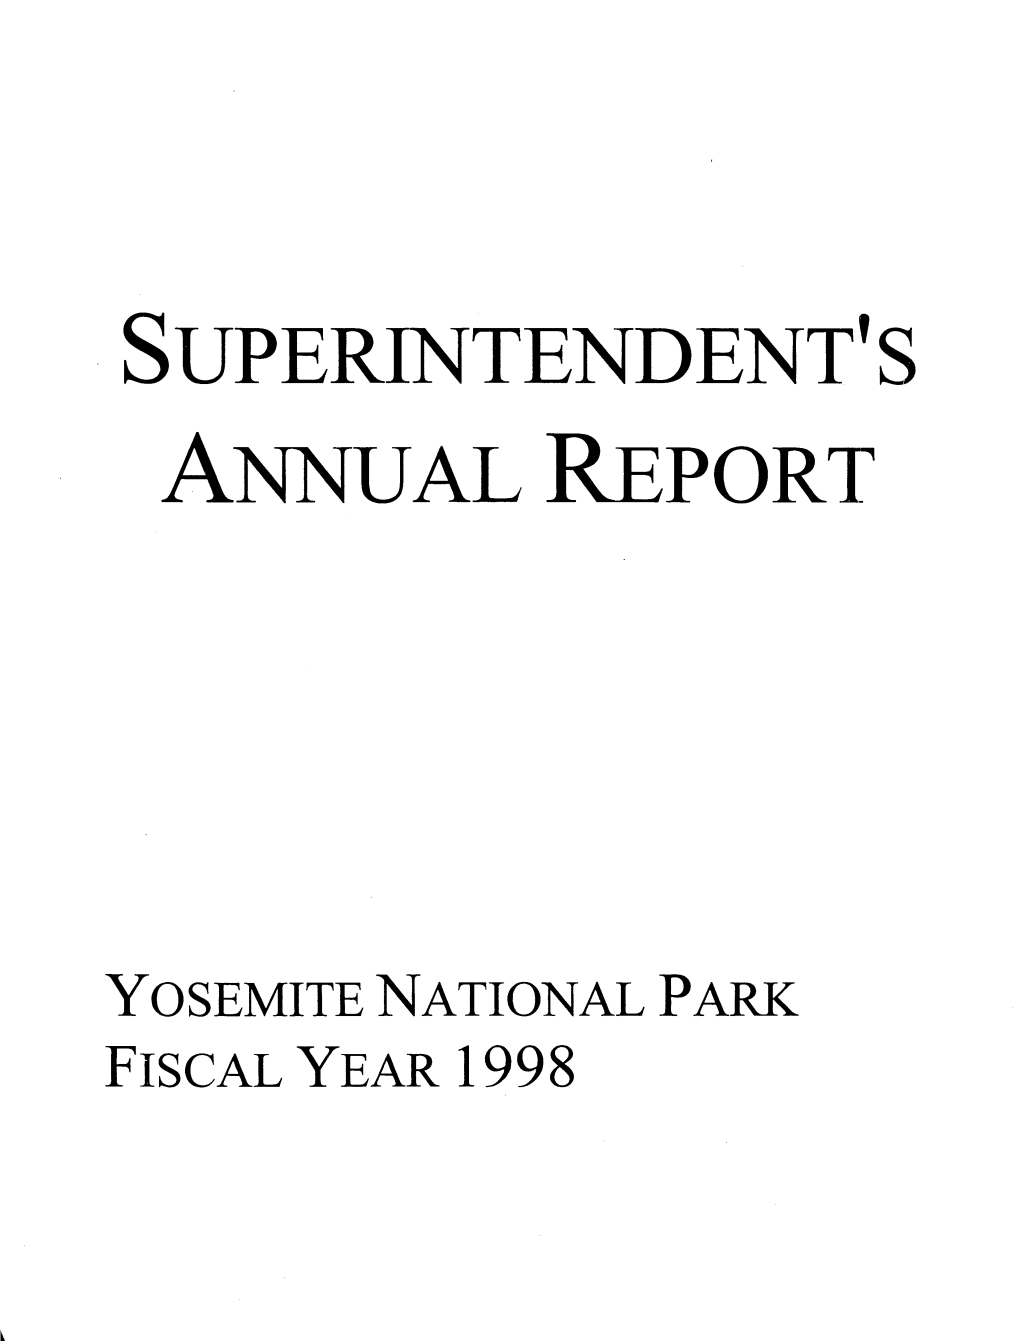 Superintendent's Annual Report